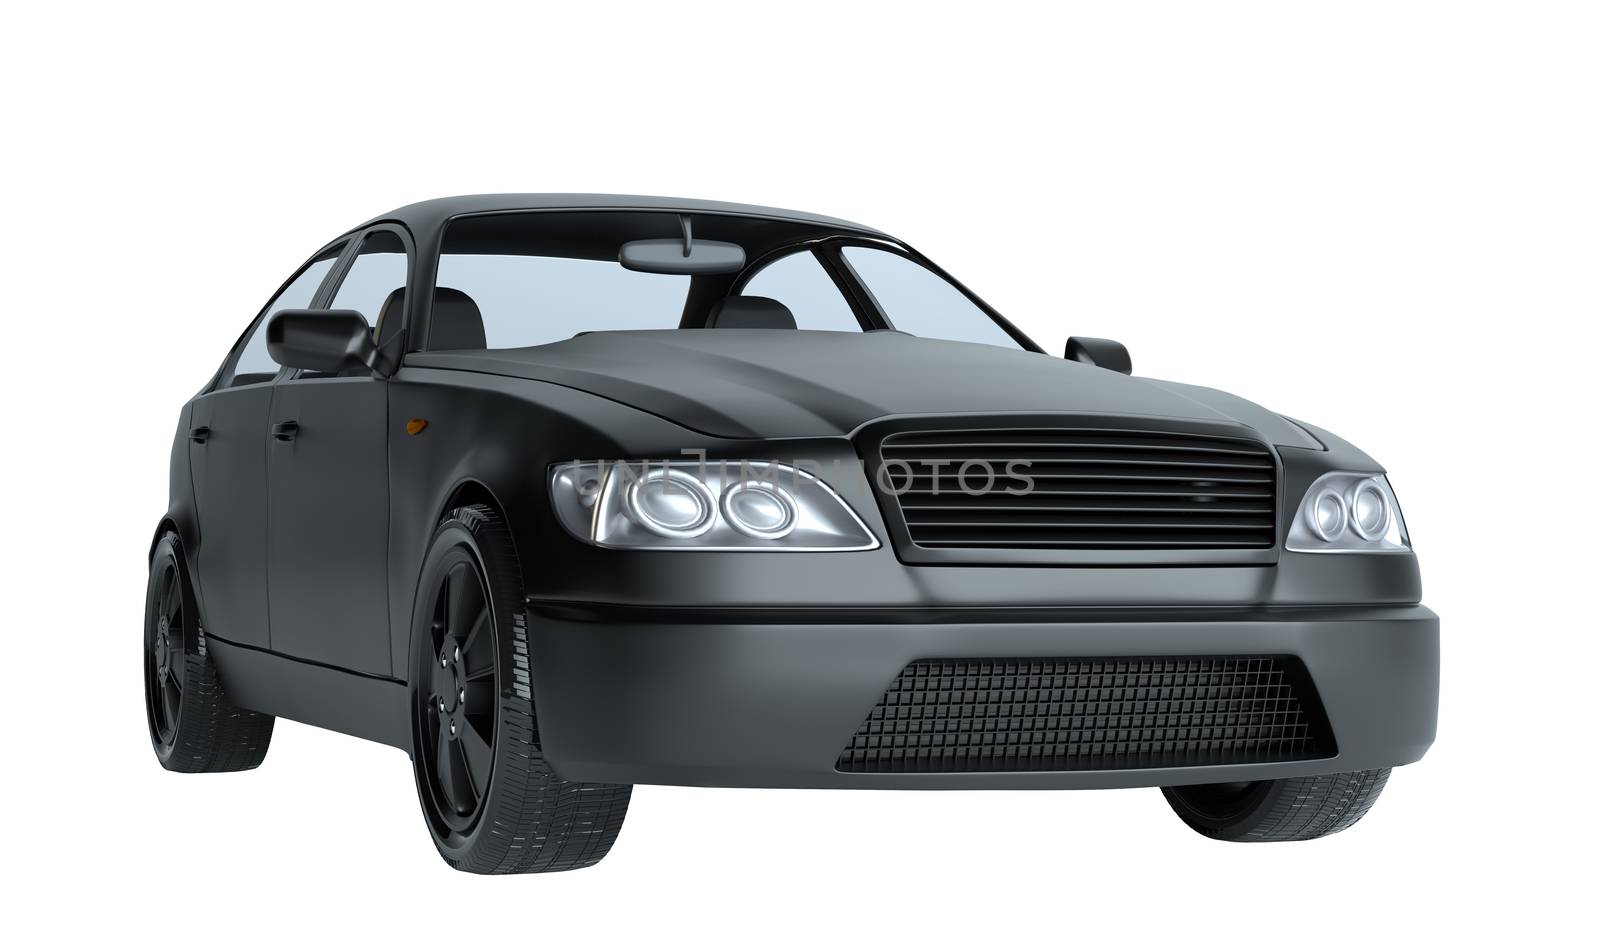 A CG render of a generic luxury sedan by cherezoff